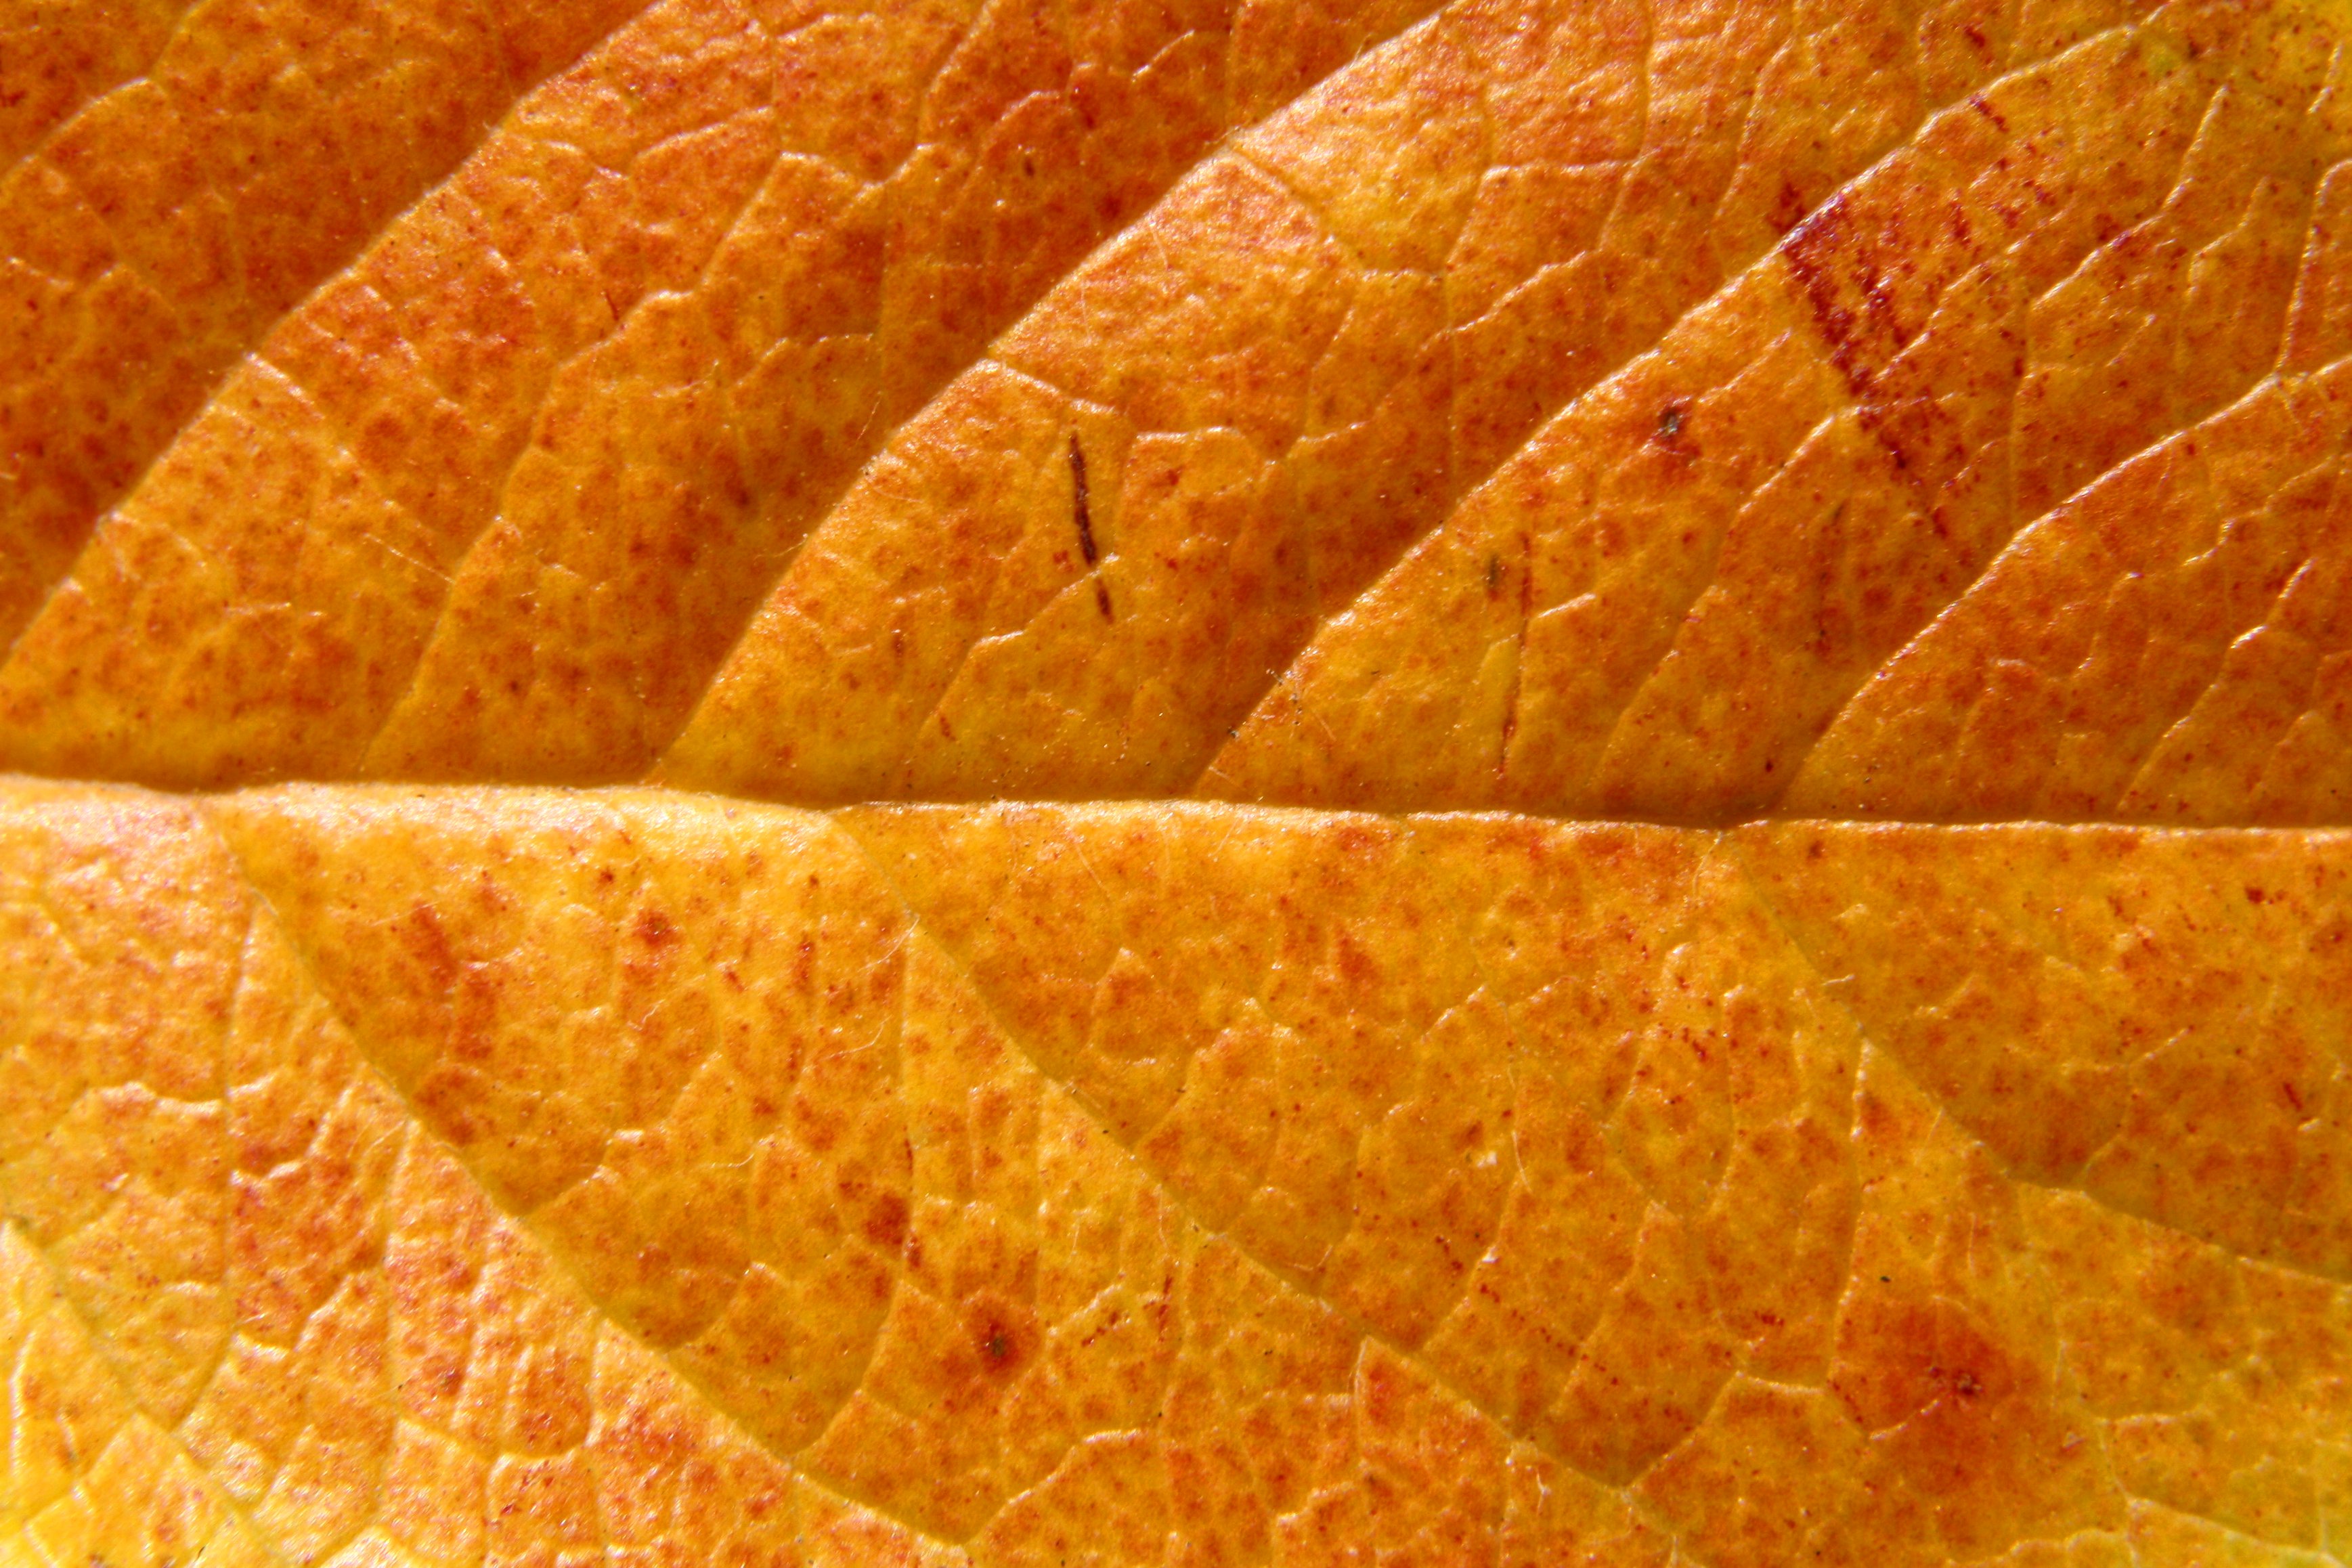 Orange Leaf Close Up Texture Picture | Free Photograph | Photos ...